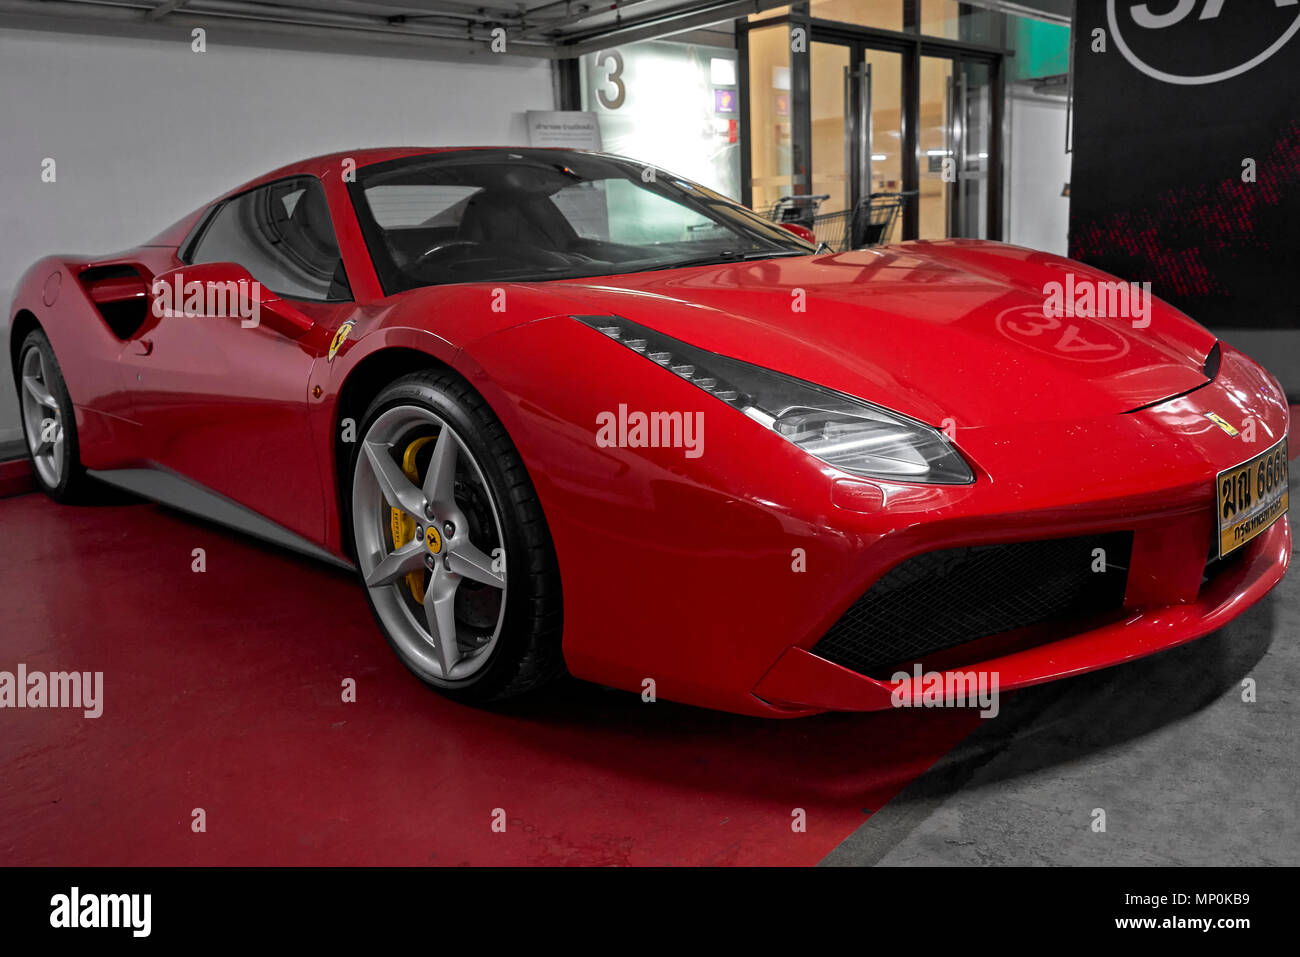 Ferrari 488 gtb cars hi-res stock photography and images - Alamy